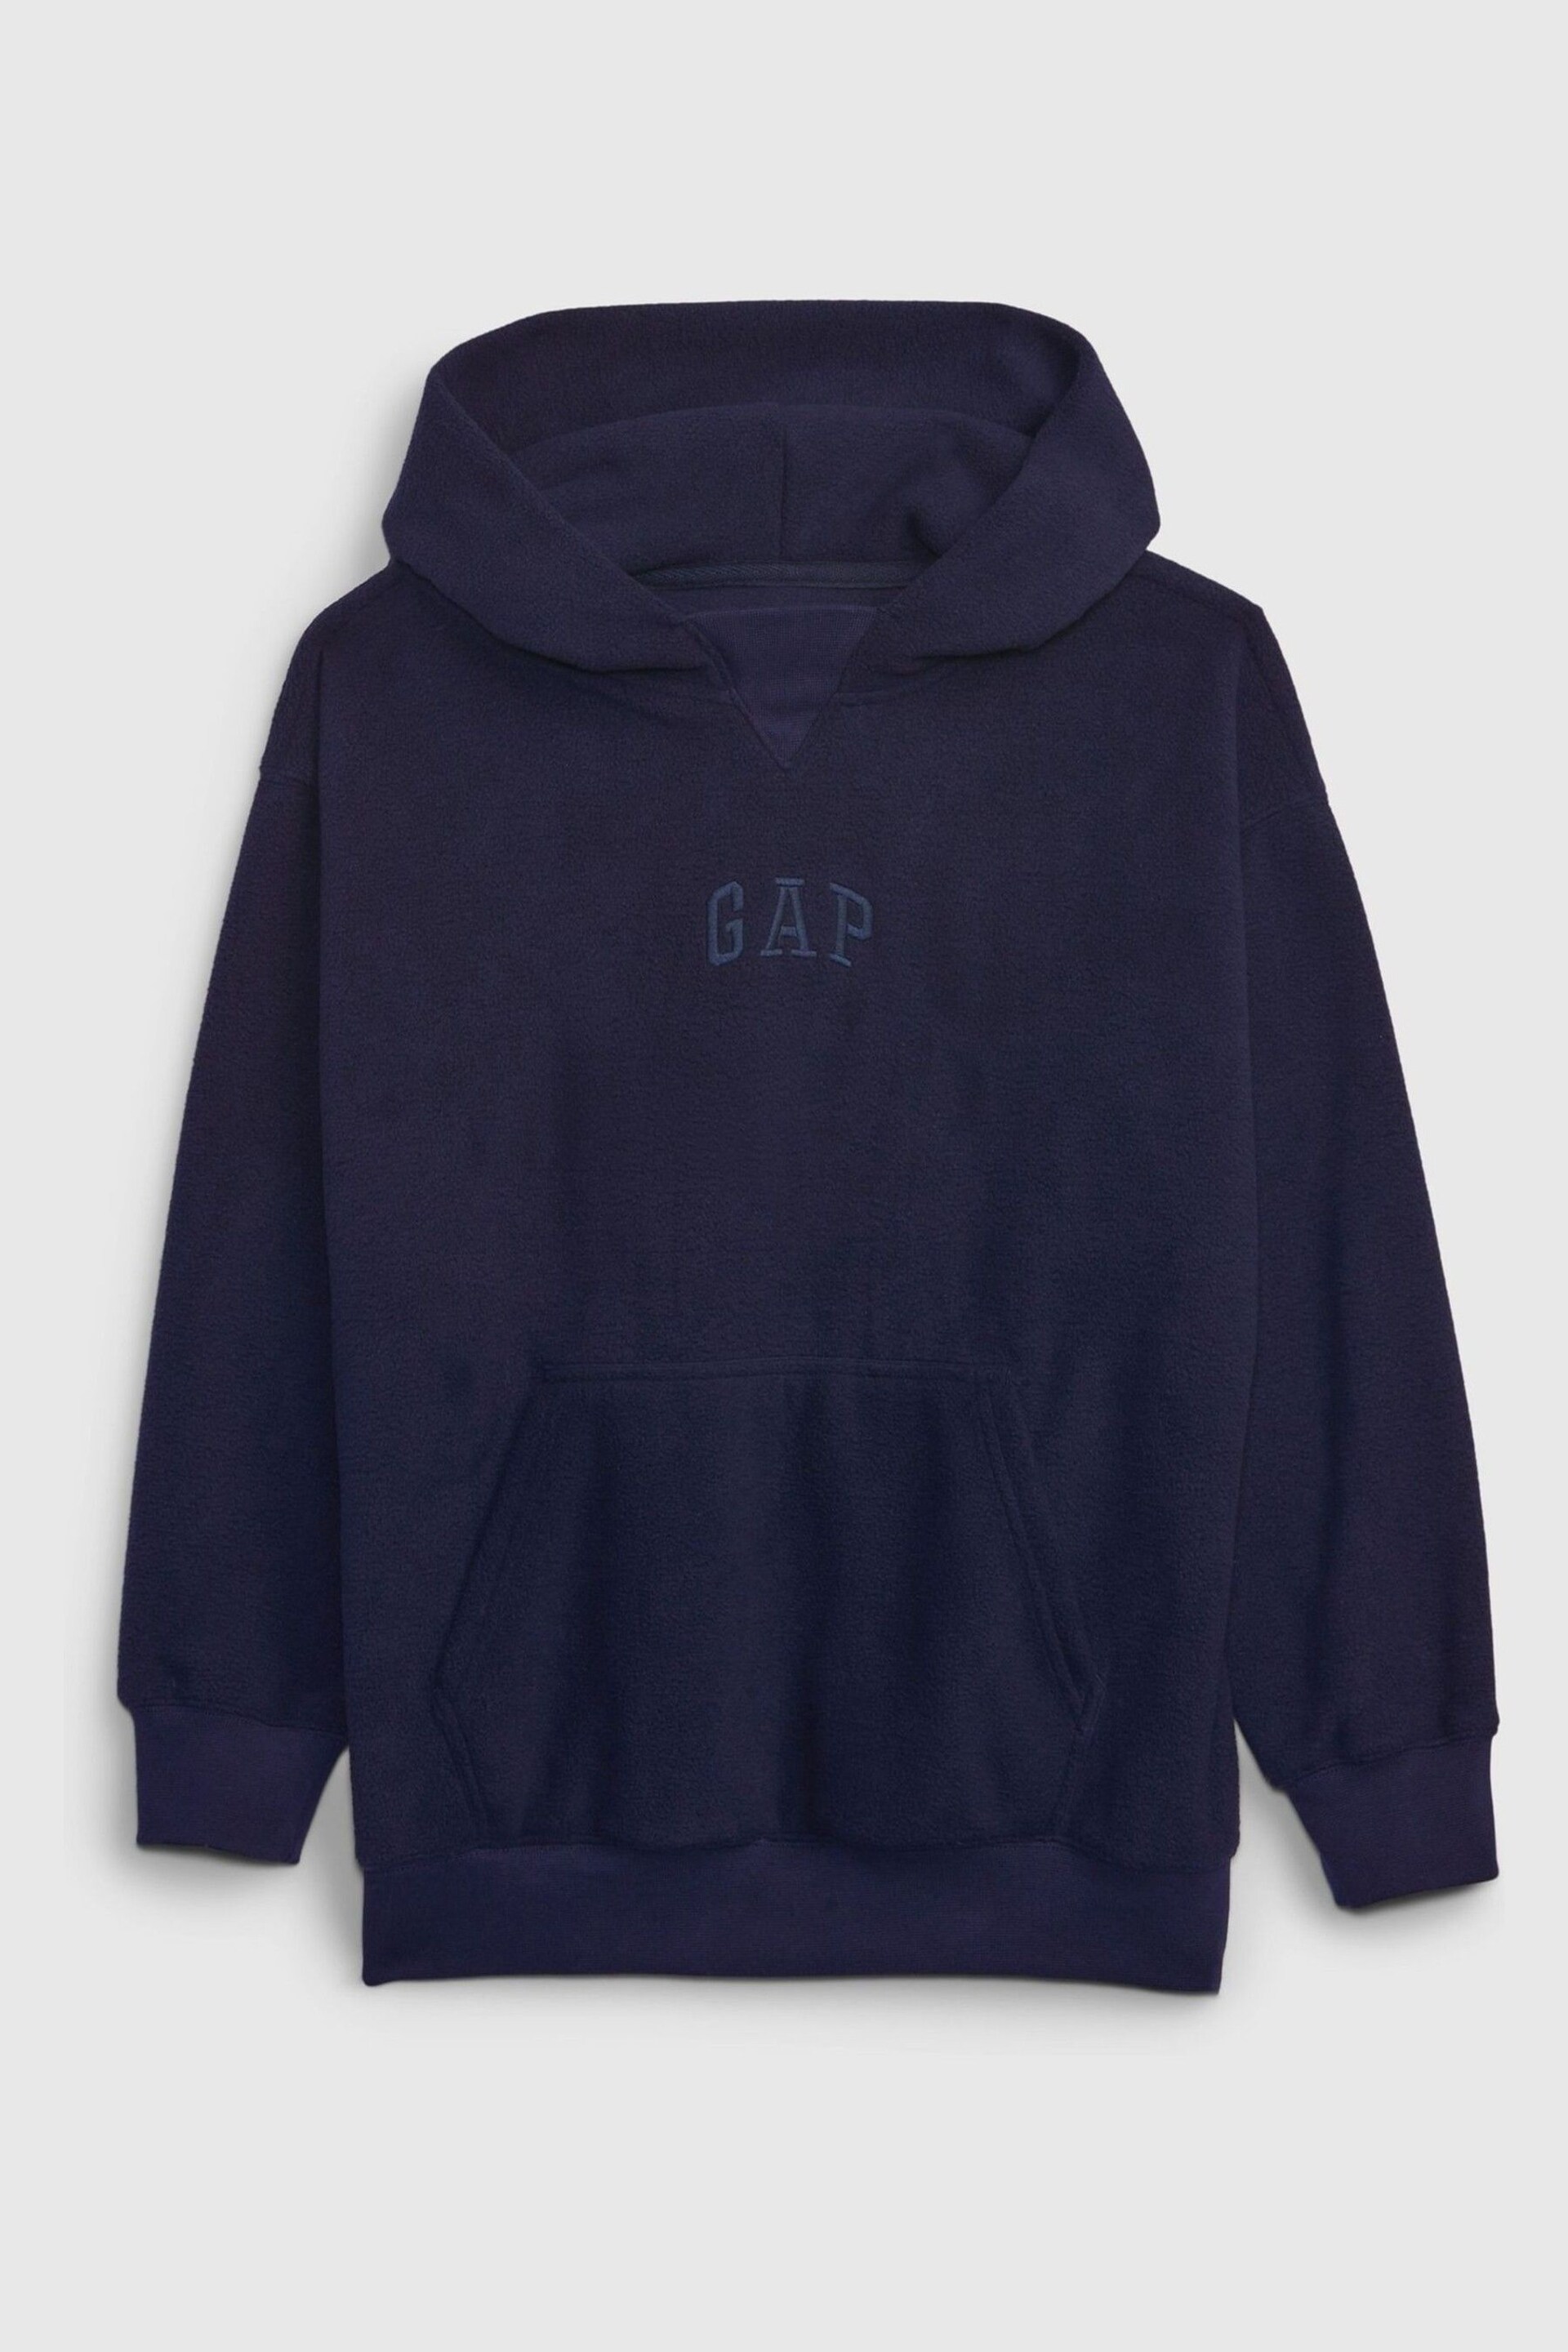 Gap Blue Mini Logo Pullover Hoodie - Image 1 of 1